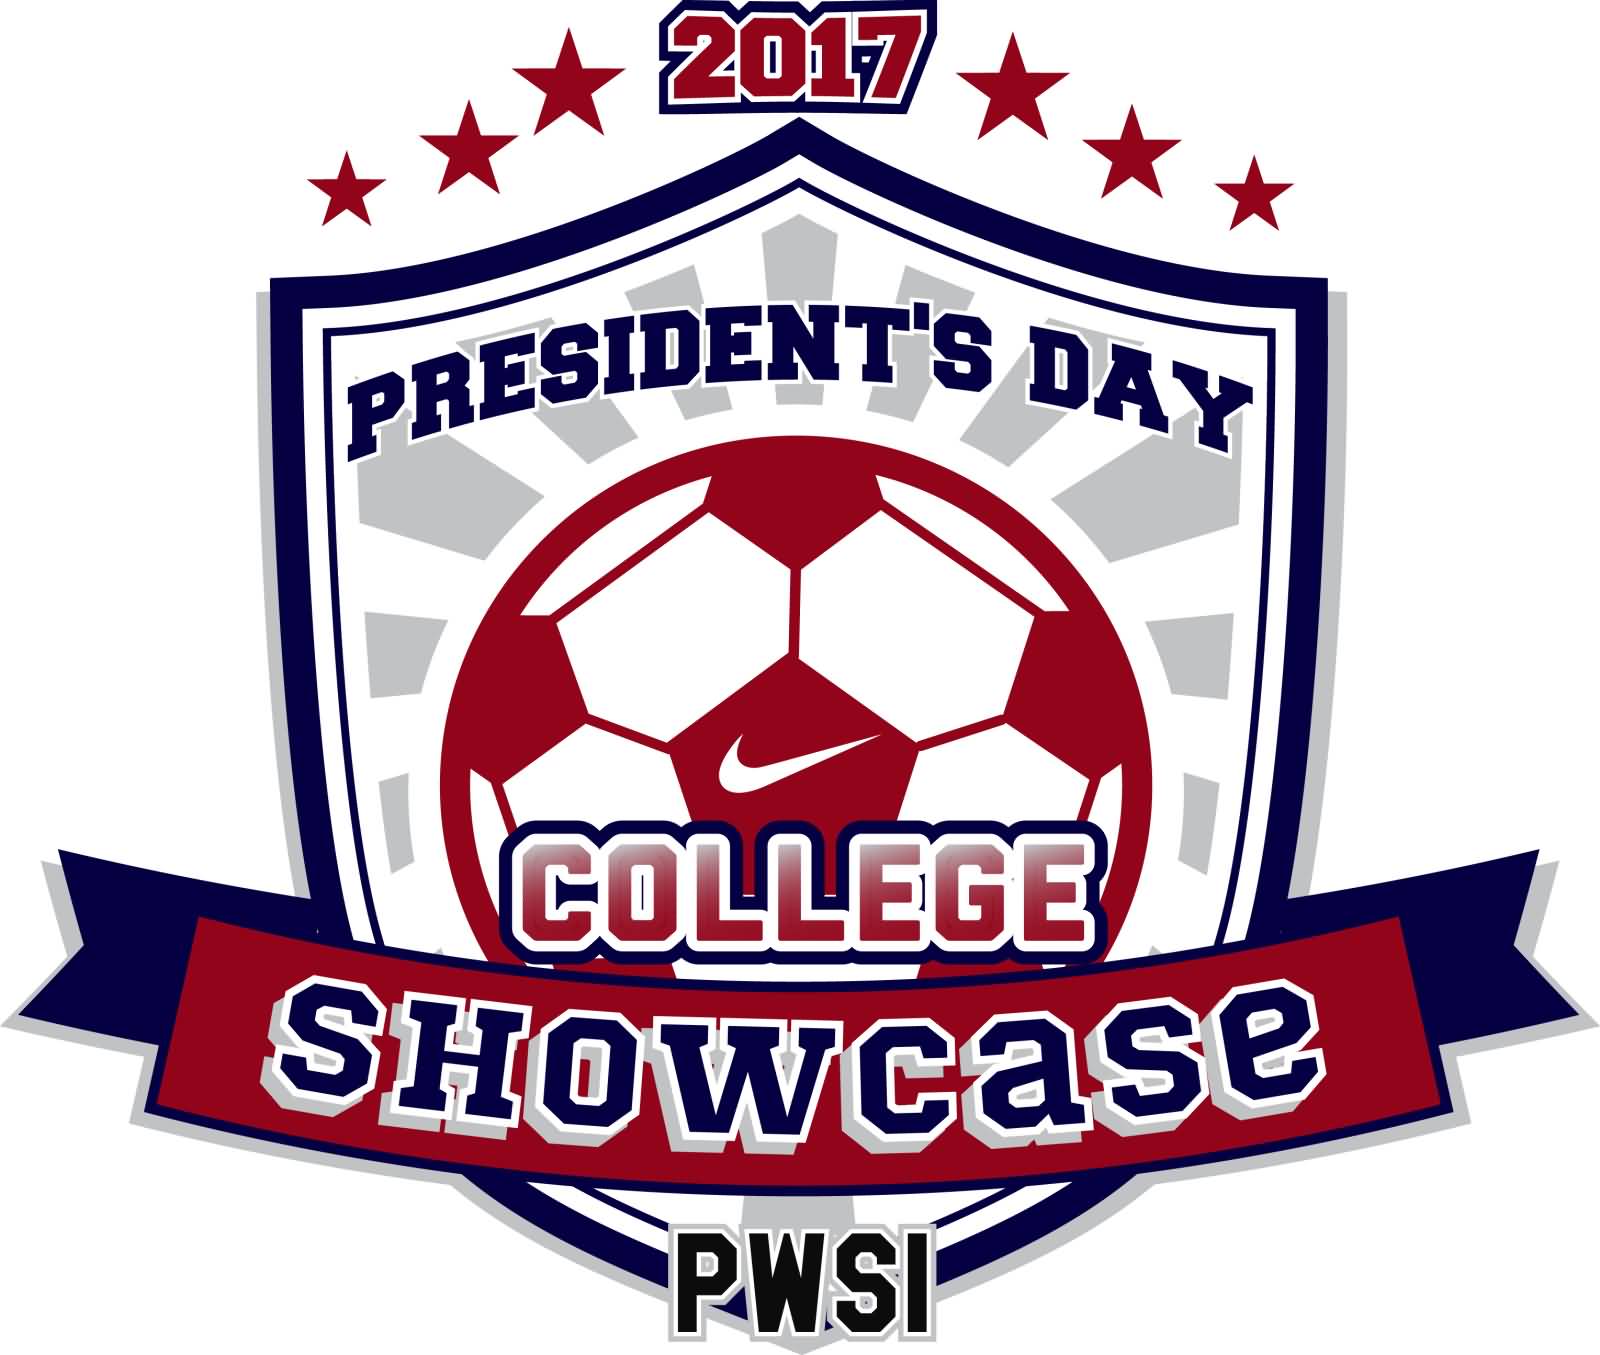 2017 Presidents Day College Showcase Logo